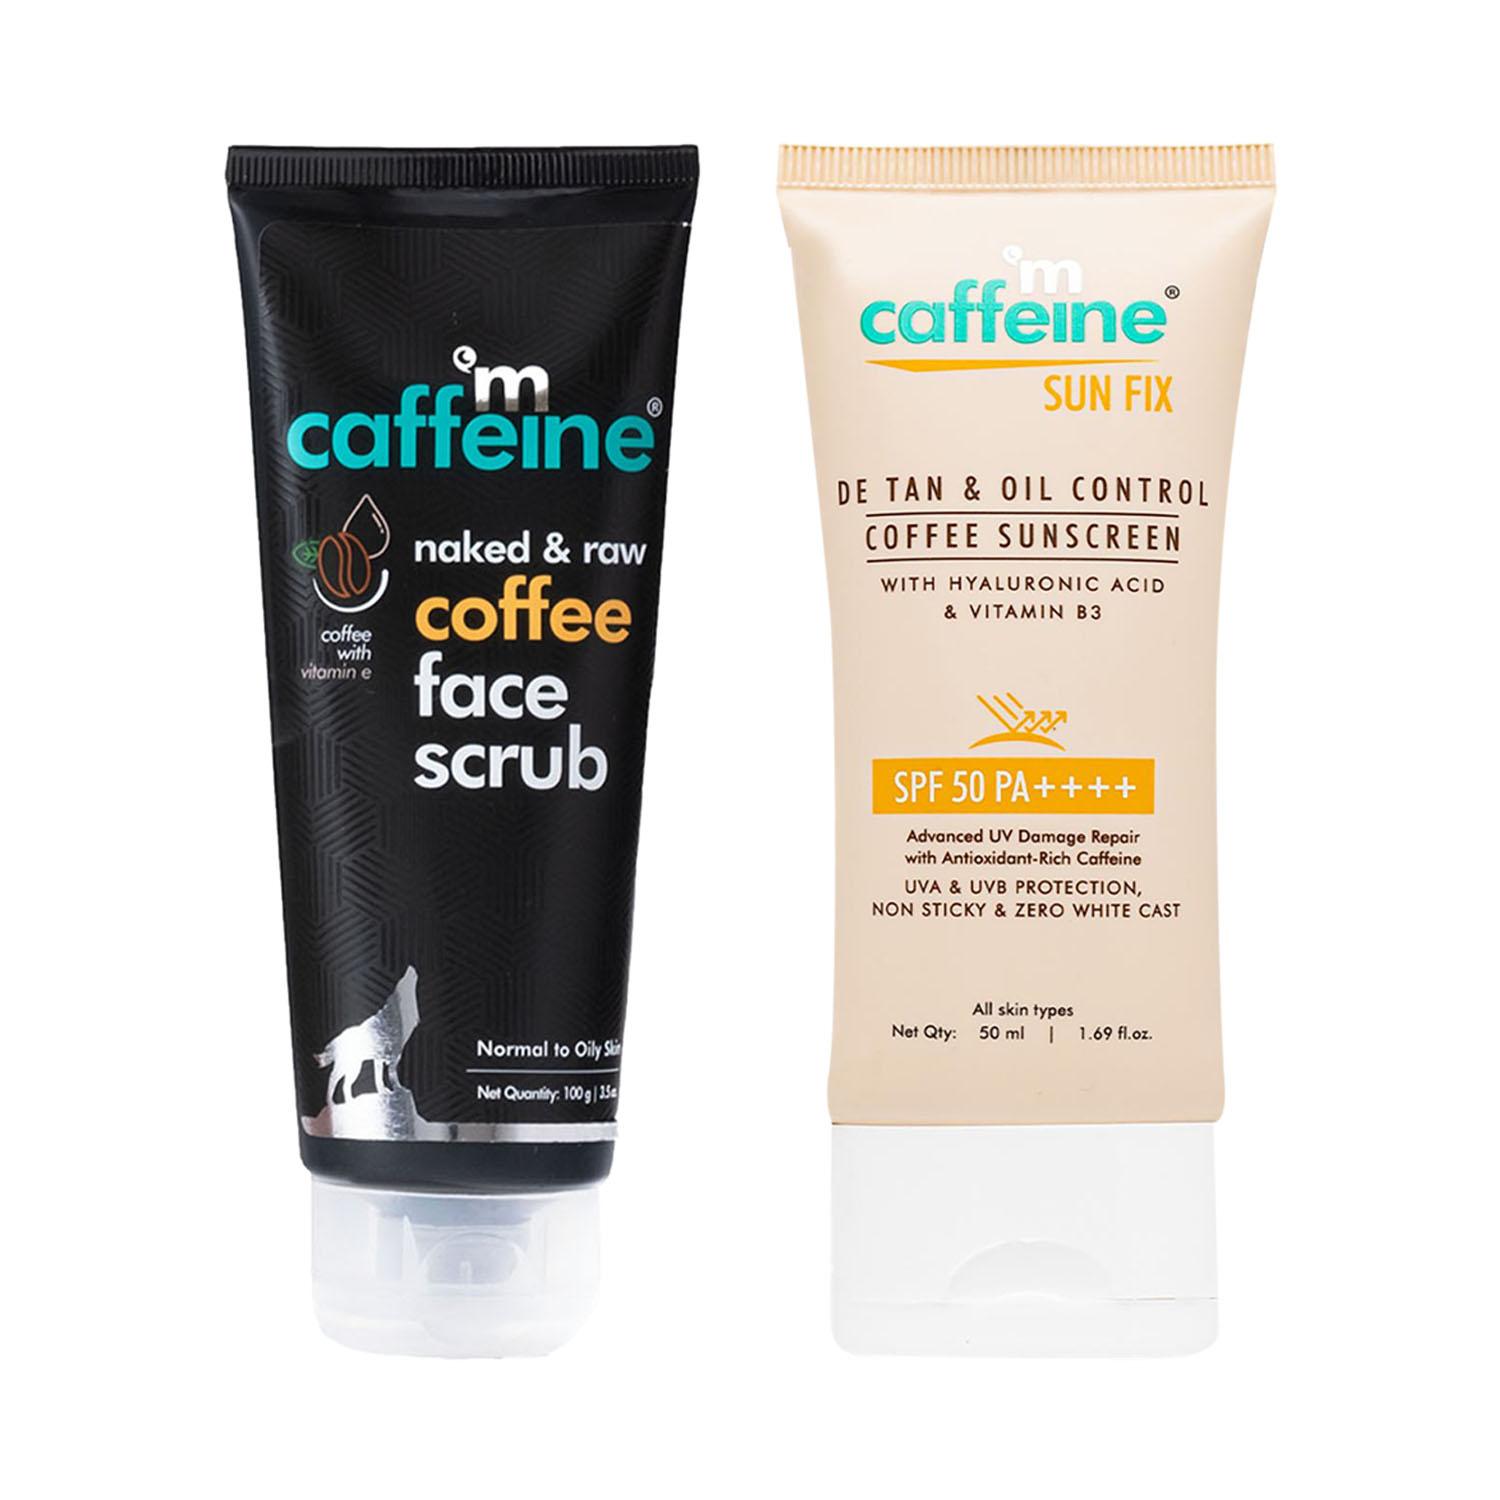 mCaffeine Cleanse Sun protect Combo - Naked & Raw Coffee Face Scrub & Detan & Coffee Sunscreen